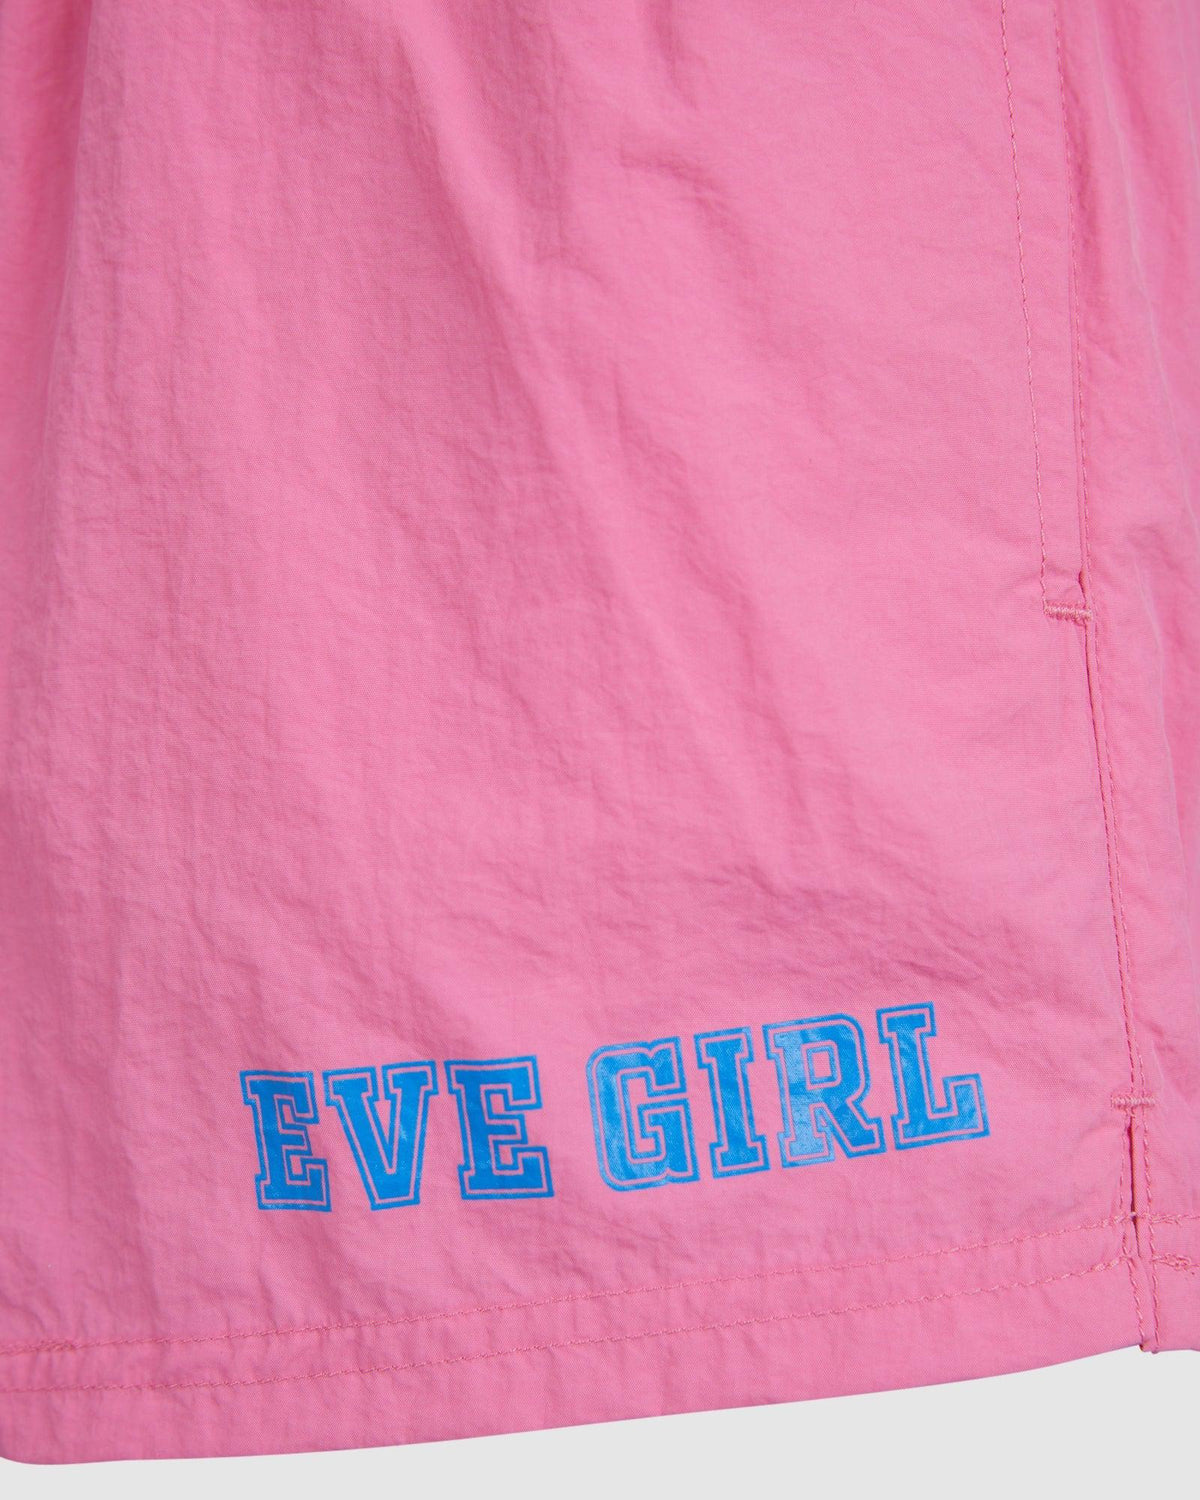 Eve Girl 3-7-Kids Academy Short Pink-Edge Clothing